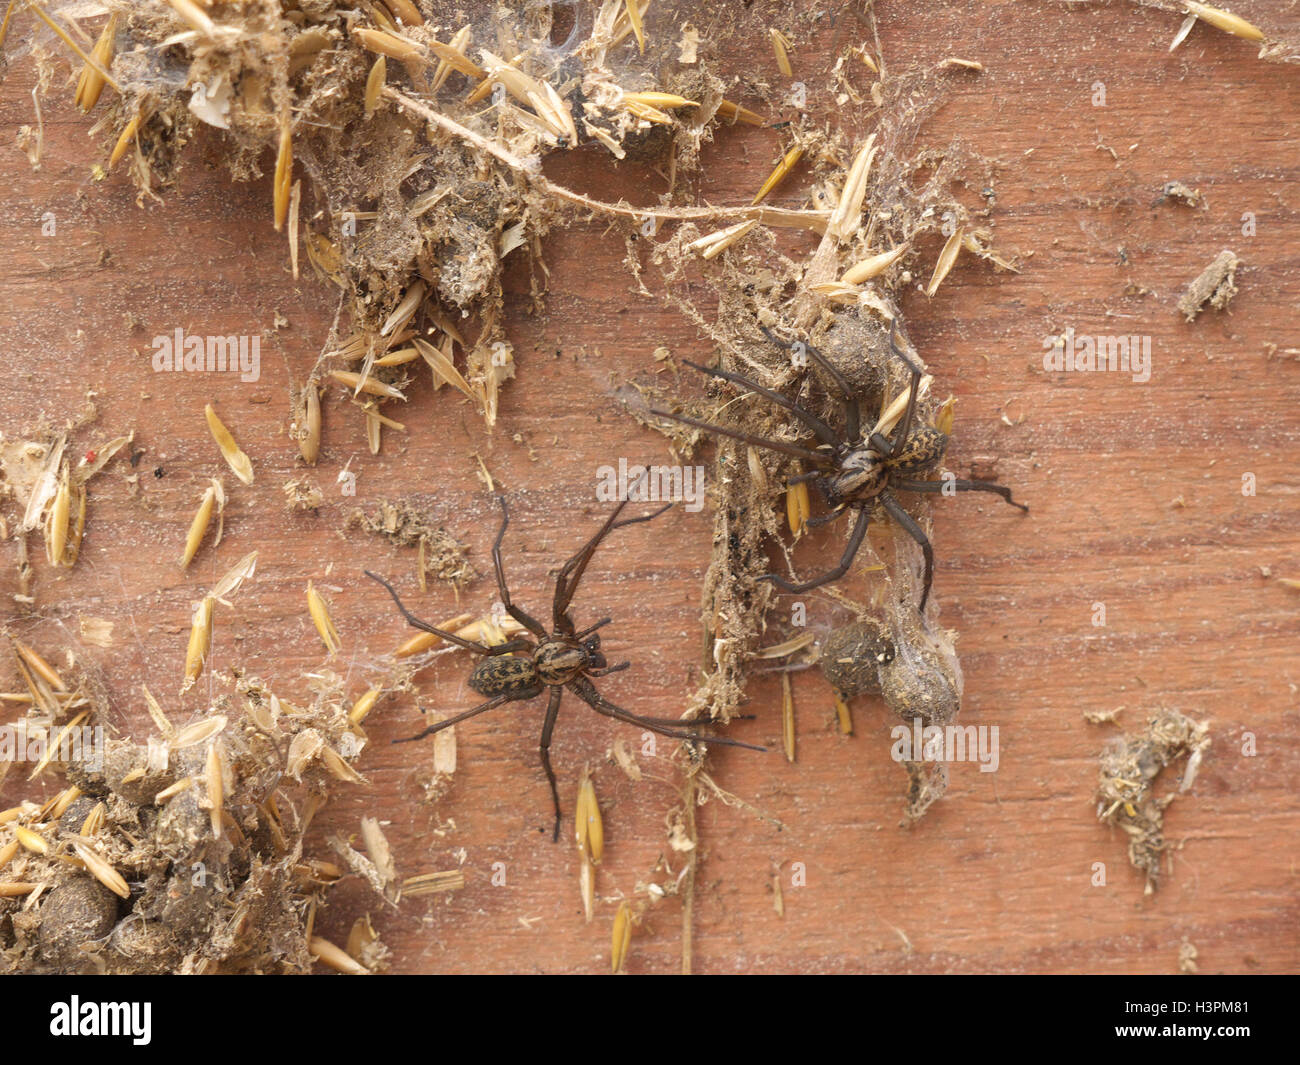 Two common House Spiders (Eratigena Atrica formally Tegenaria gigantea ) about to fight Stock Photo